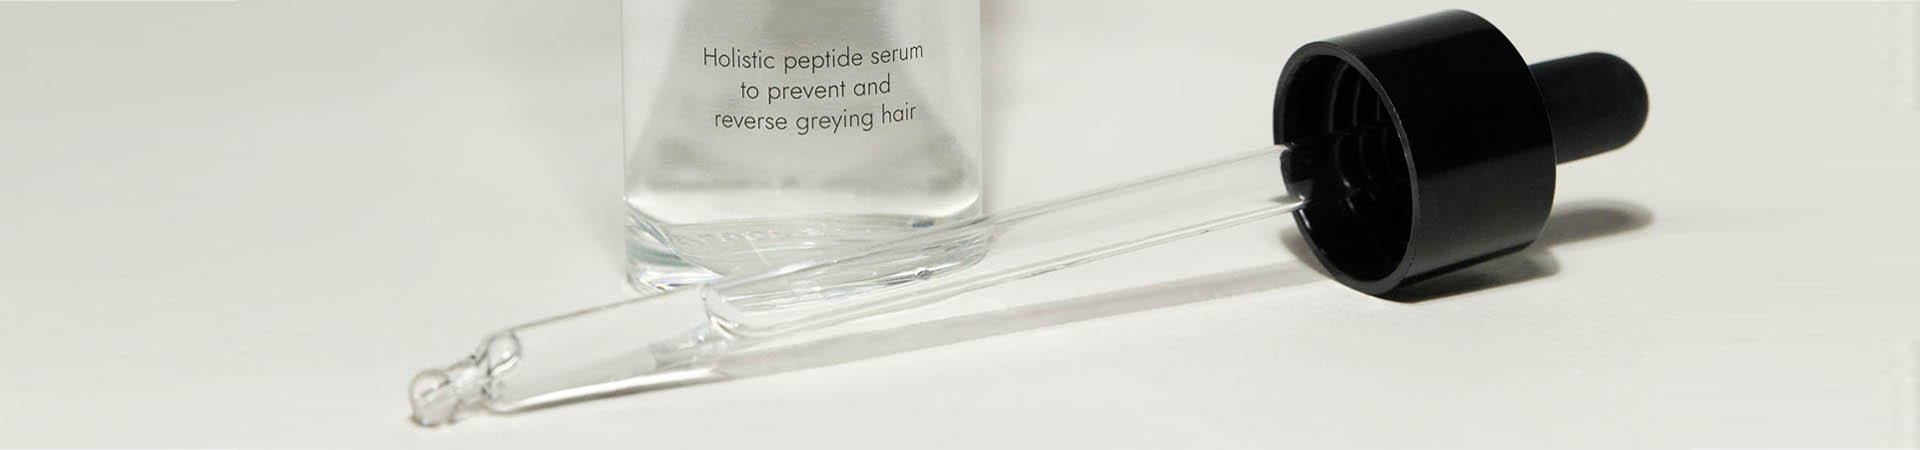 Holistic peptide serum